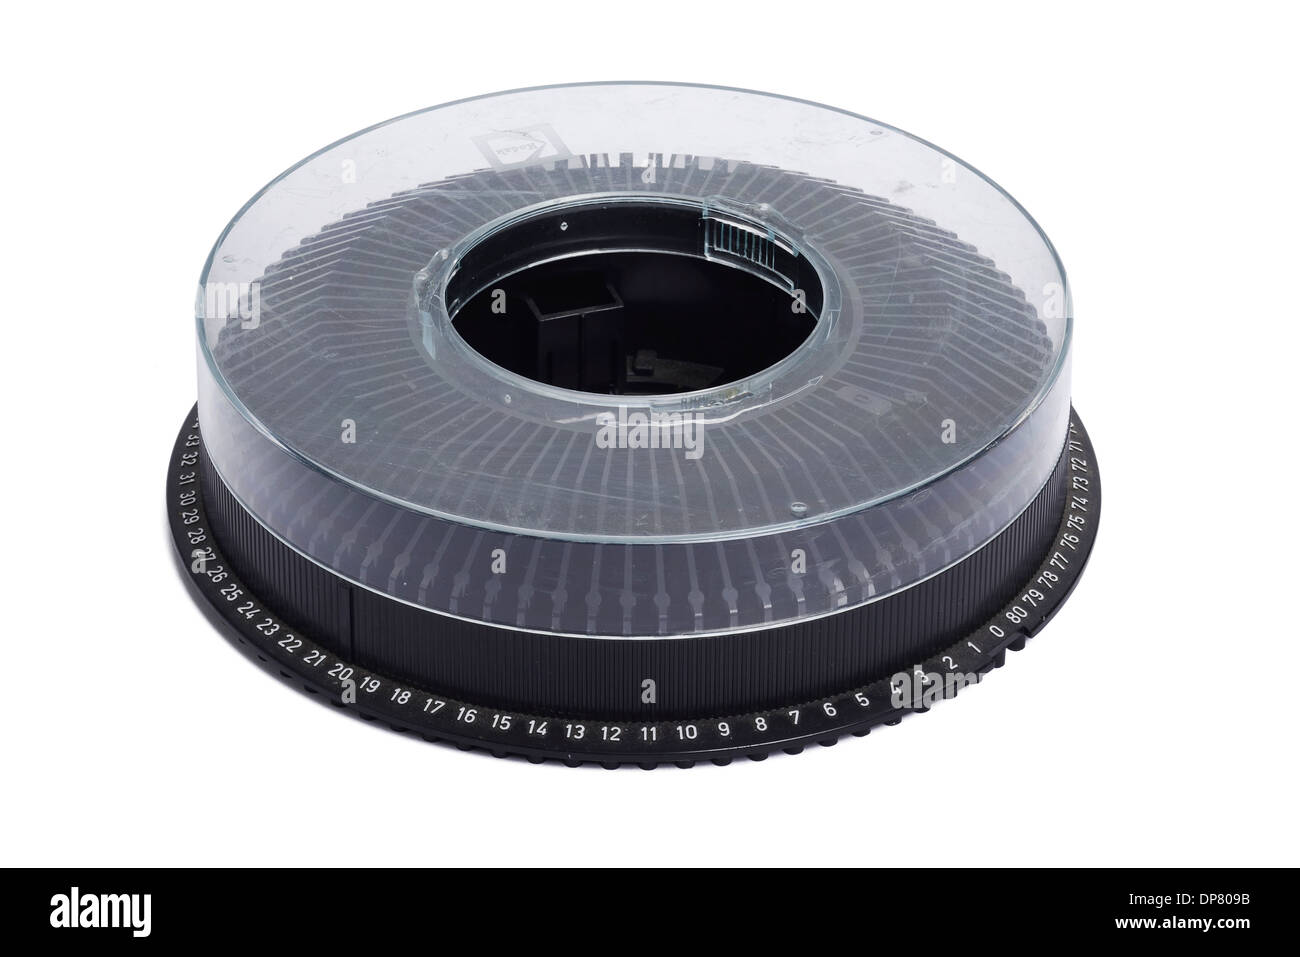 Kodak-Karussell Kunststoff kreisförmige Einschubfachs für ein Dia-Projektor Stockfoto